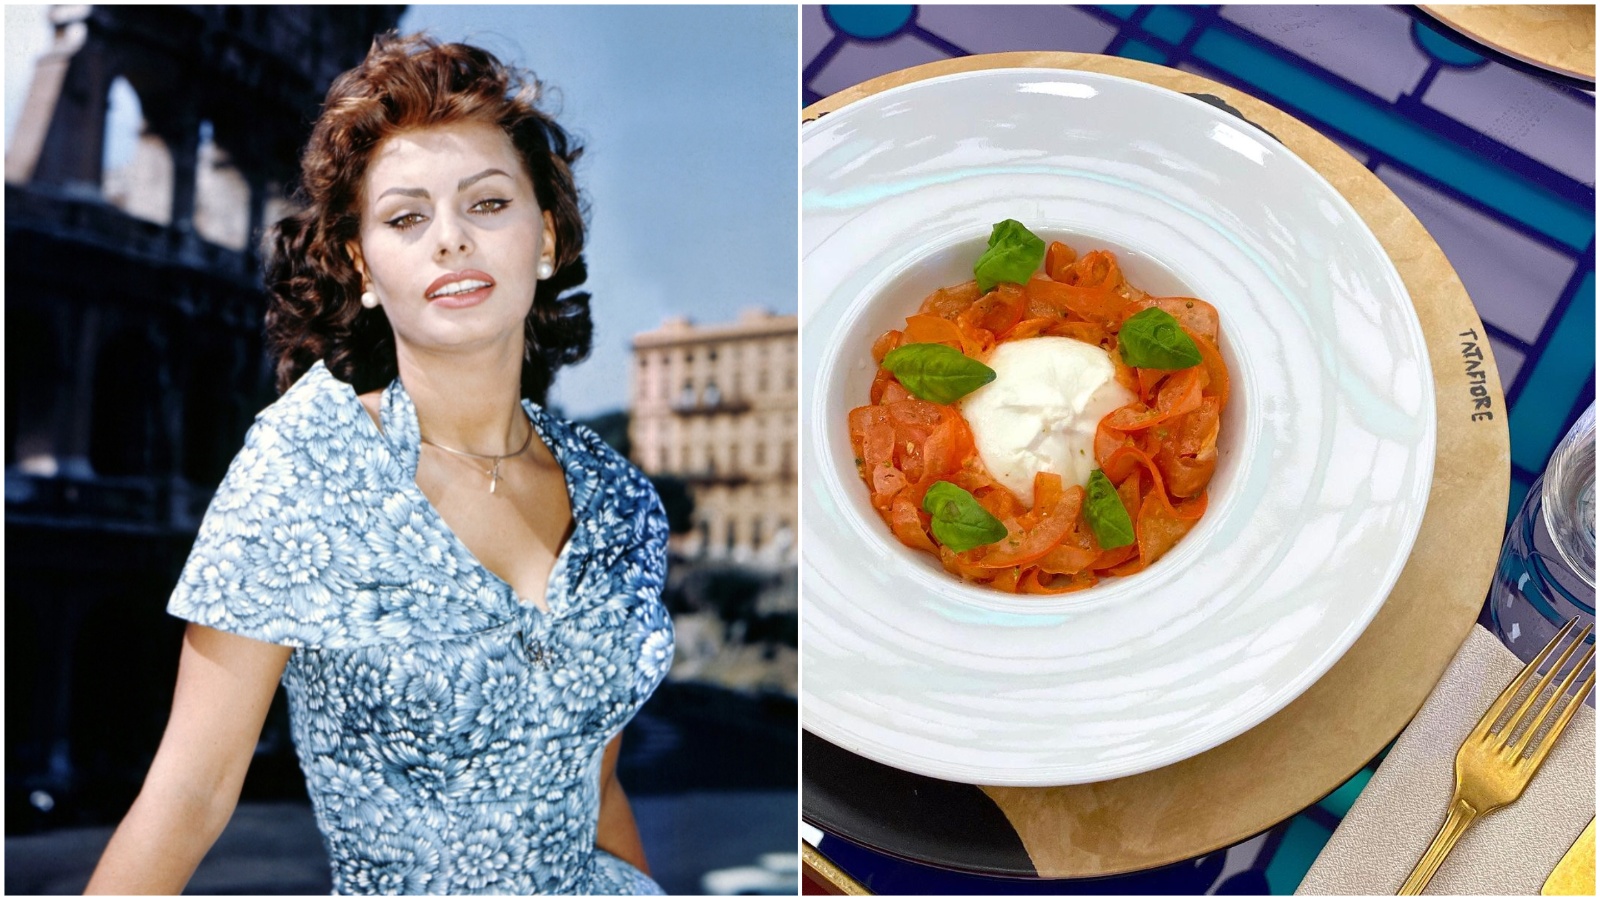 Restoran Sophie Loren uskoro se otvara u Splitu